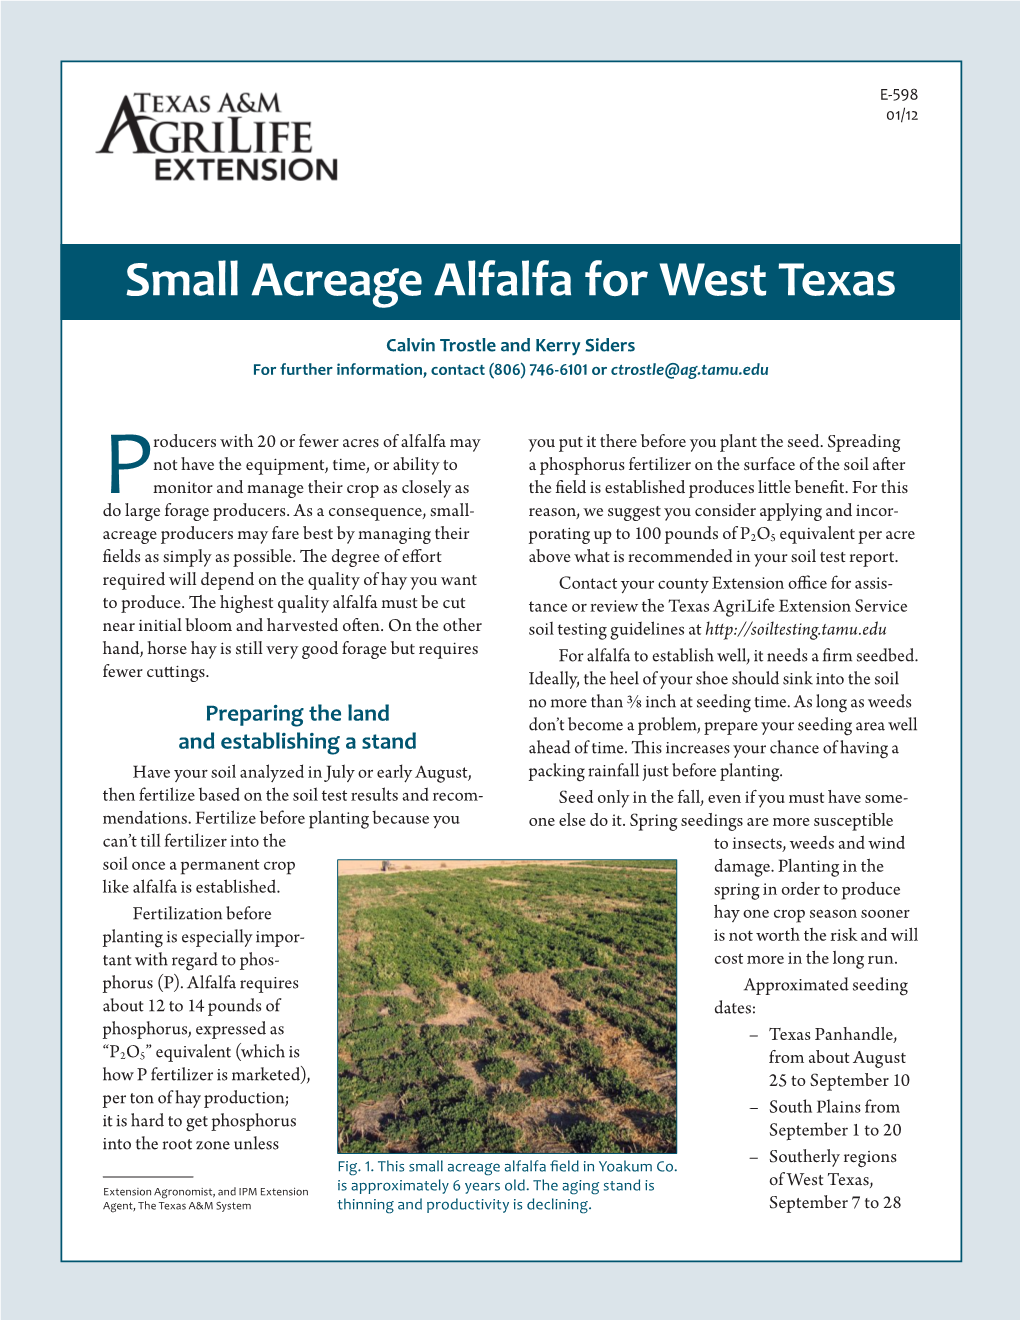 Small Acreage Alfalfa for West Texas